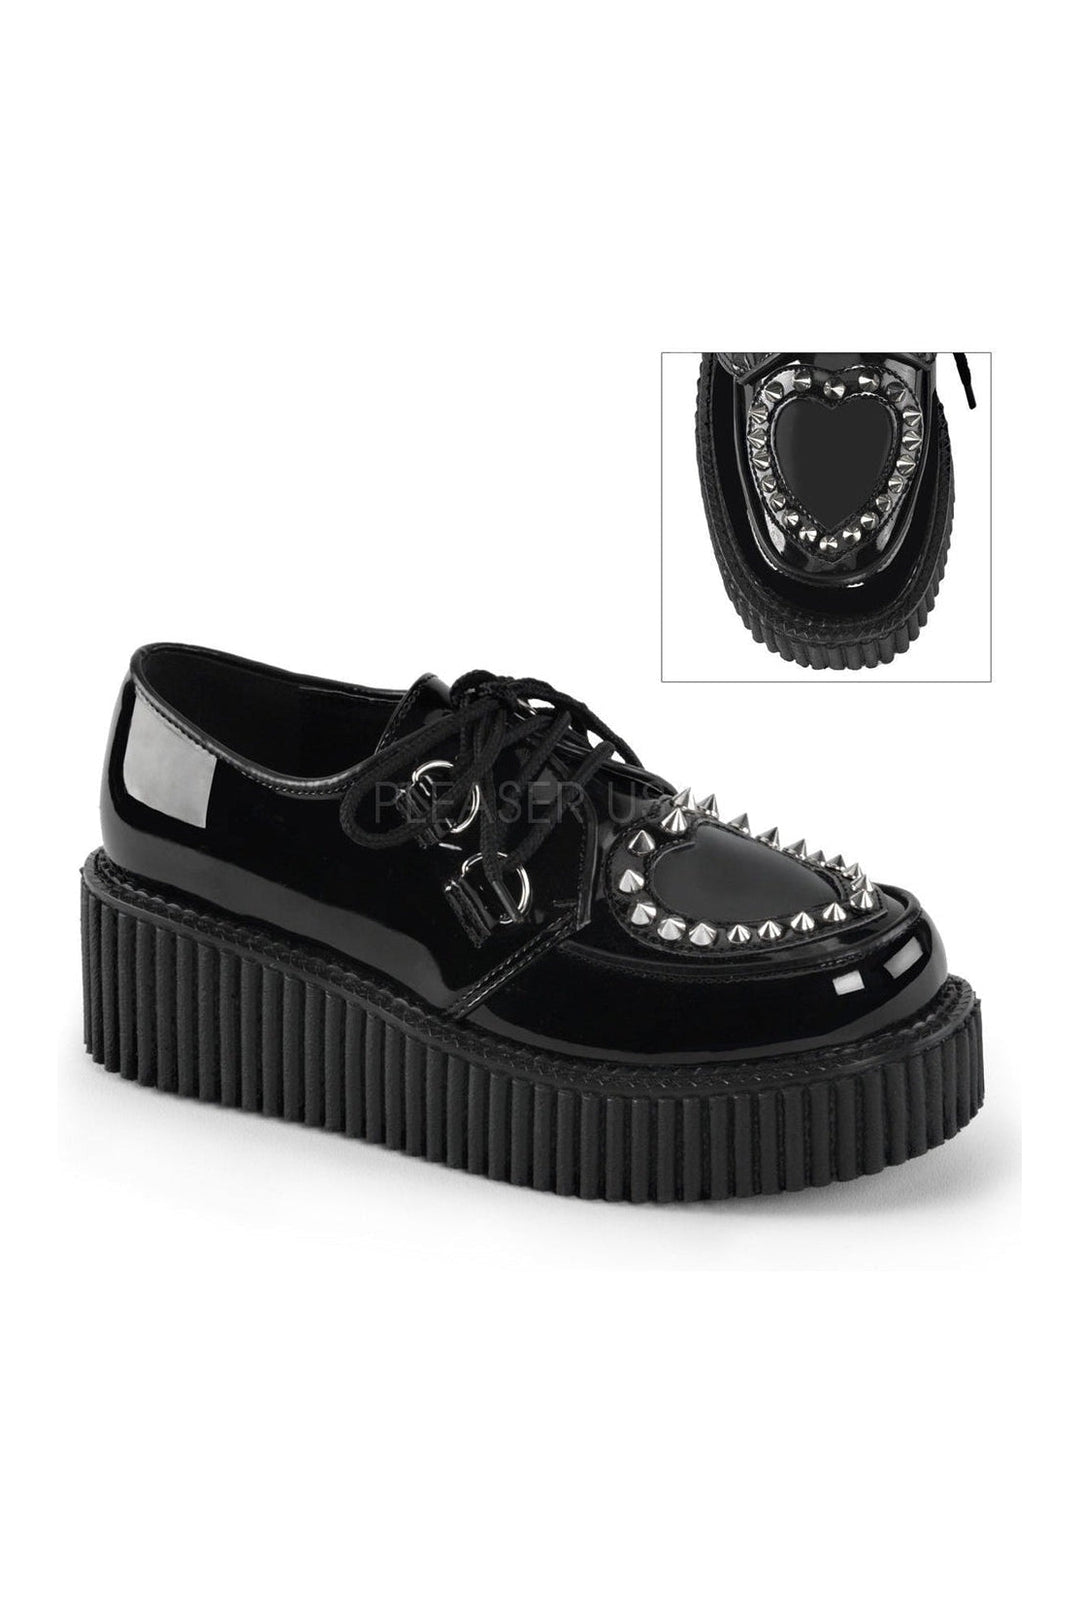 CREEPER-108 Demonia Shoe | Black Patent-Demonia-Black-Creepers-SEXYSHOES.COM